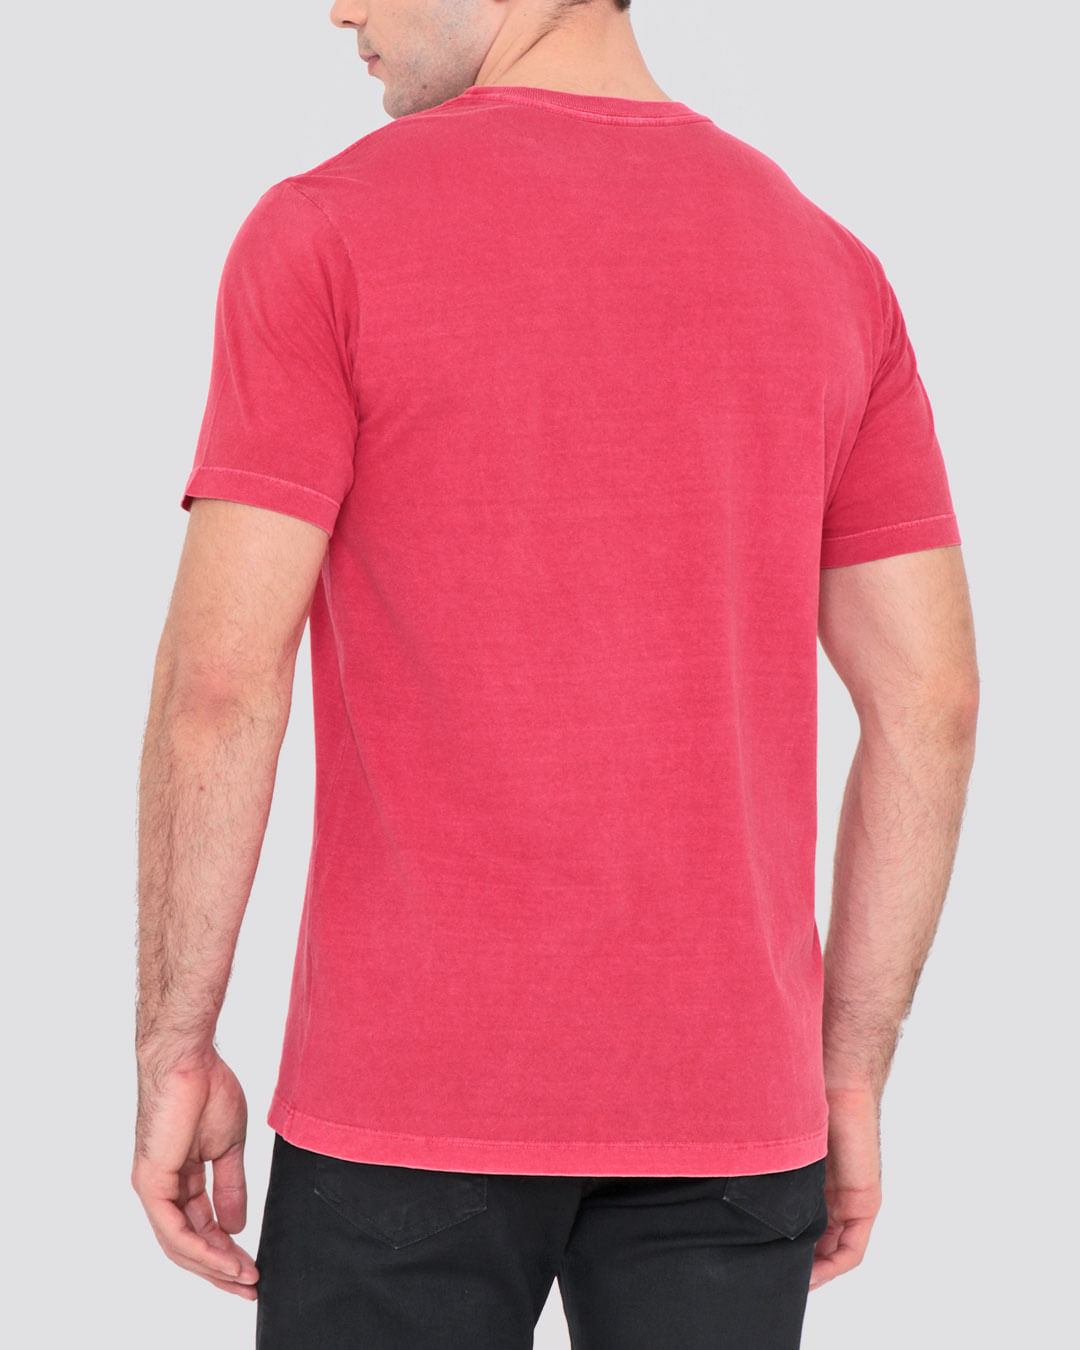 Camiseta-Bolso-Unico-Estonada-Vermelha